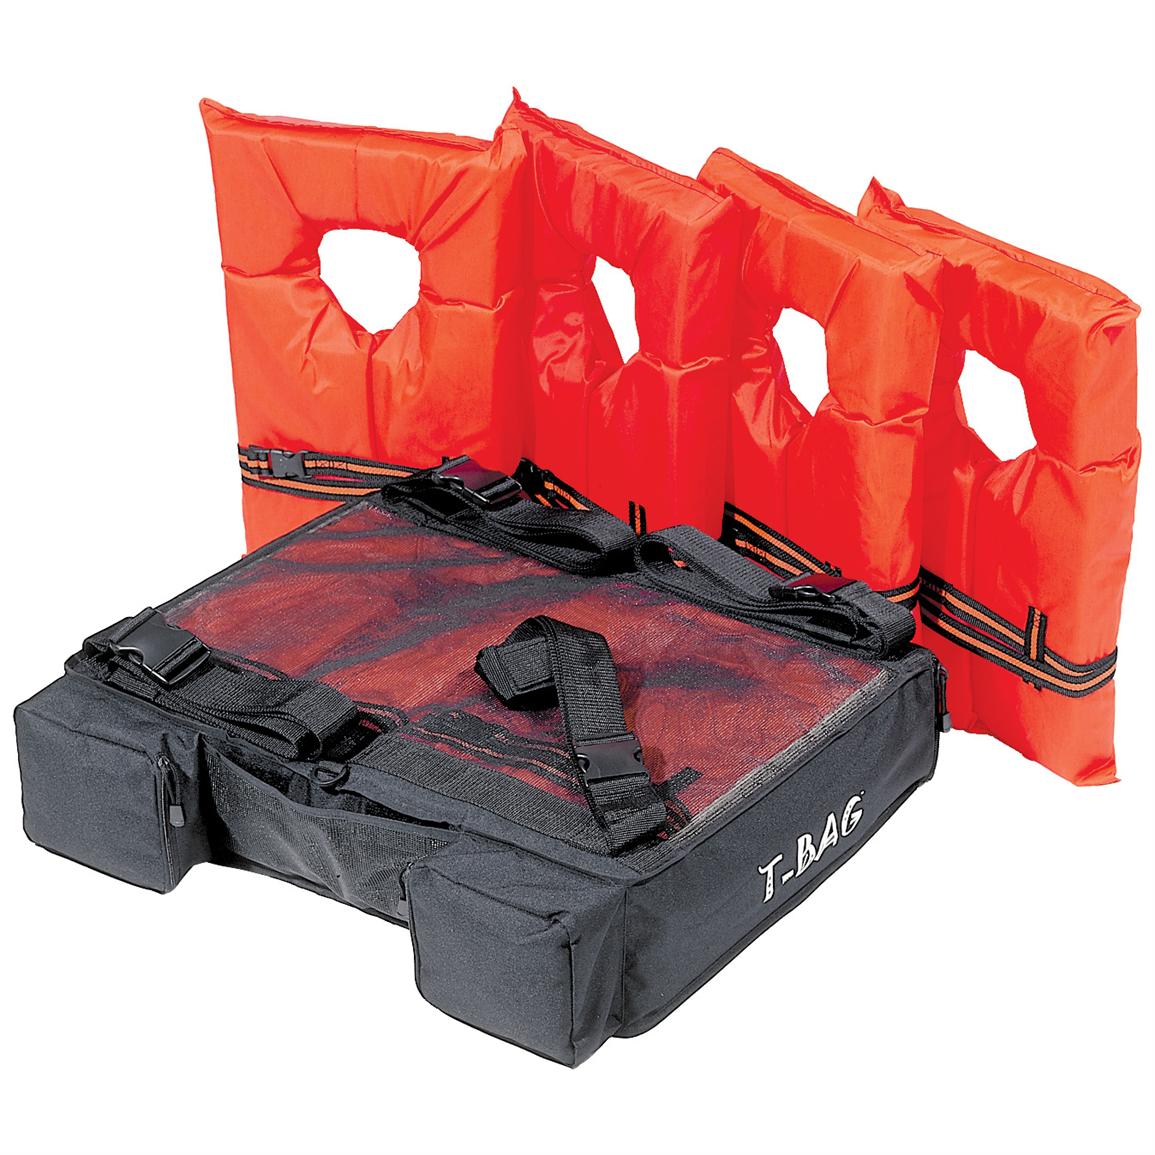 T-Bag T-Top / Bimini Top PFD Storage Bag, PFD-T4